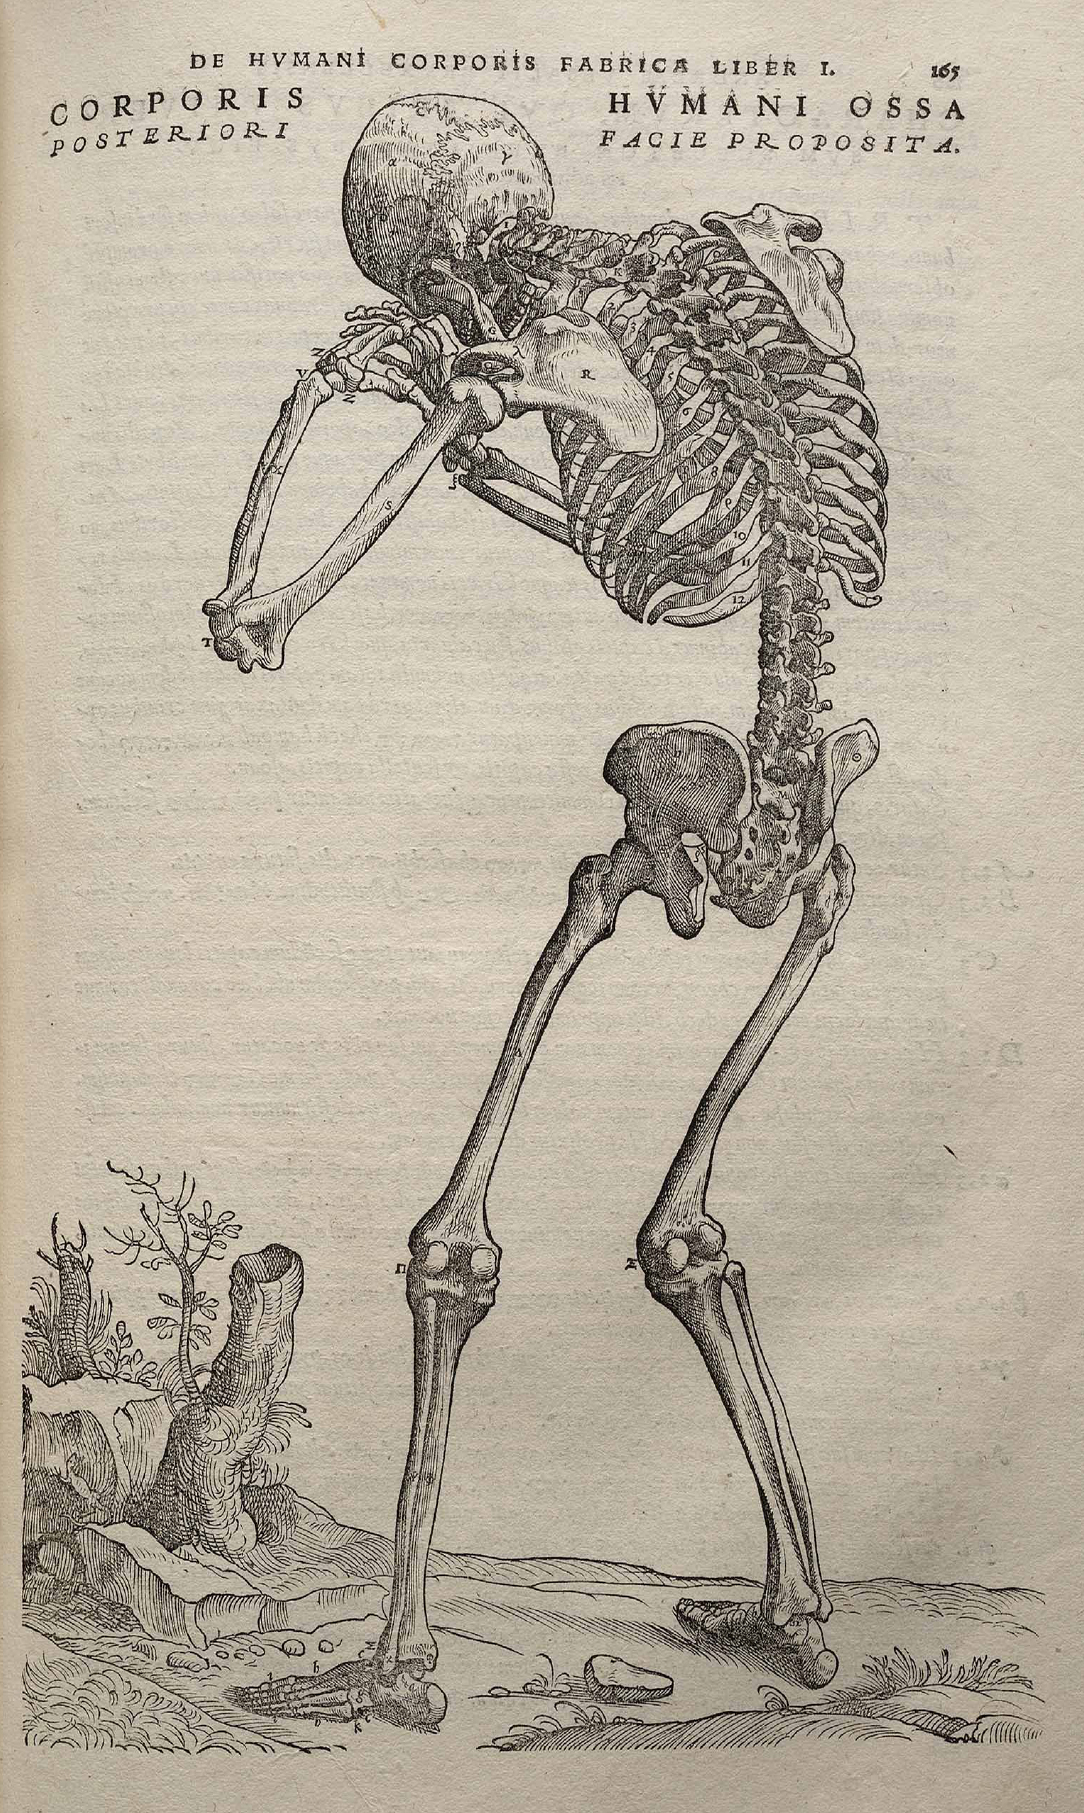 Nervous system of the human body - Andreas Vesalius — Google Arts & Culture